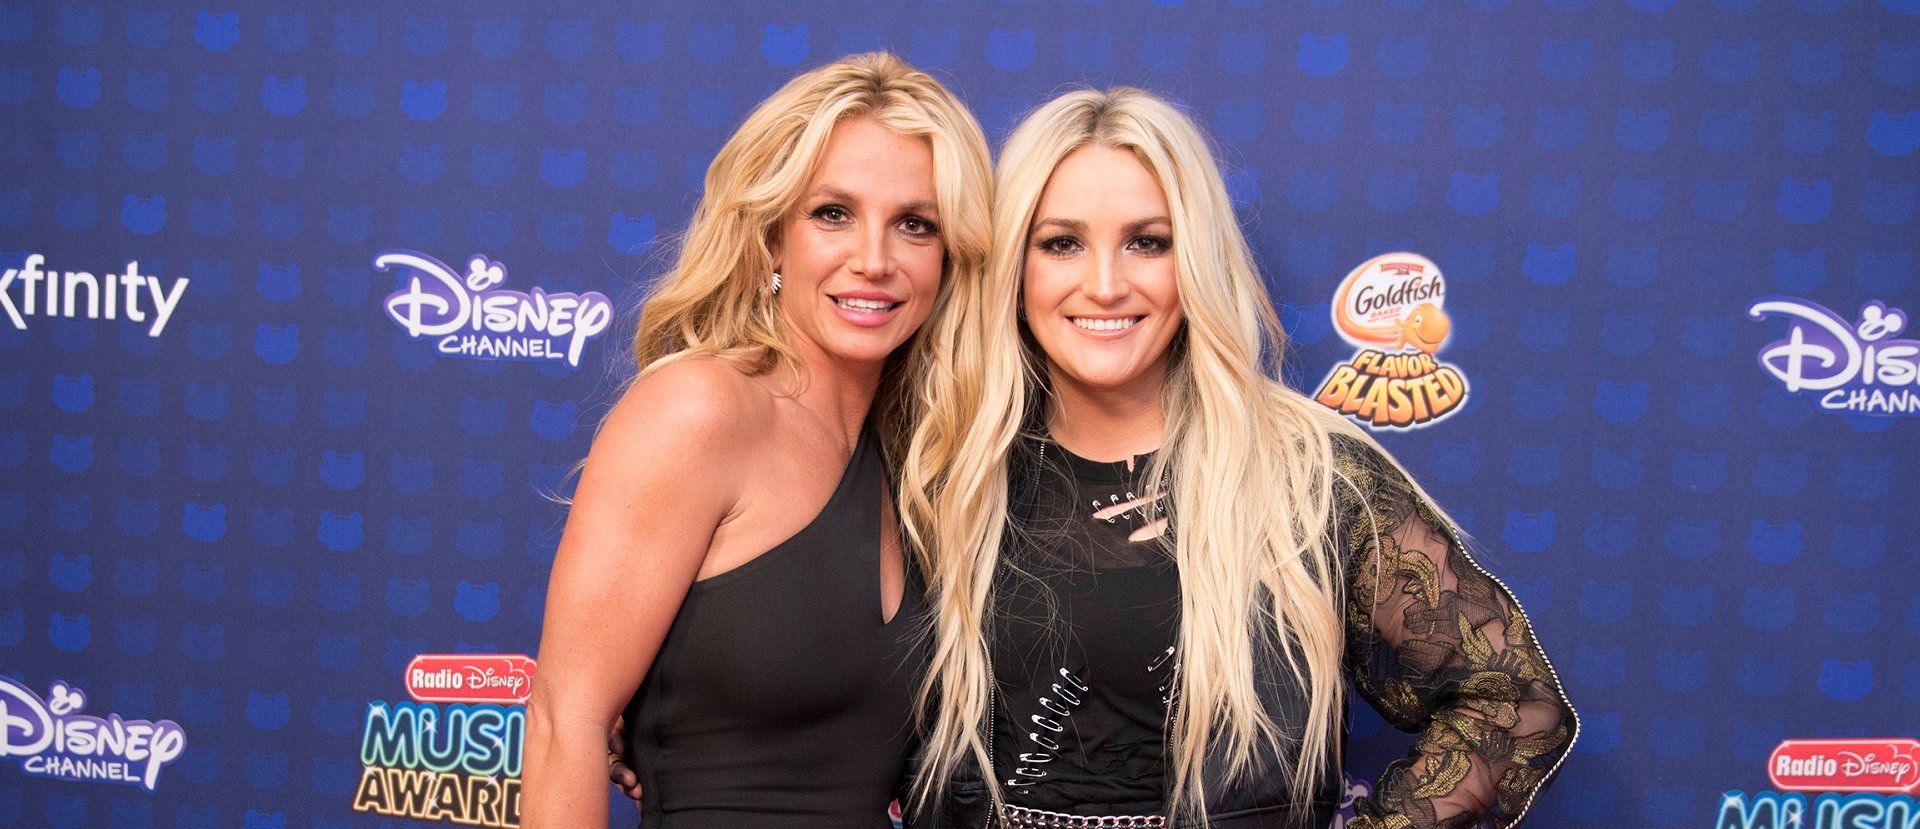 Jamie Lynn Spears and her sister, Britney Spears